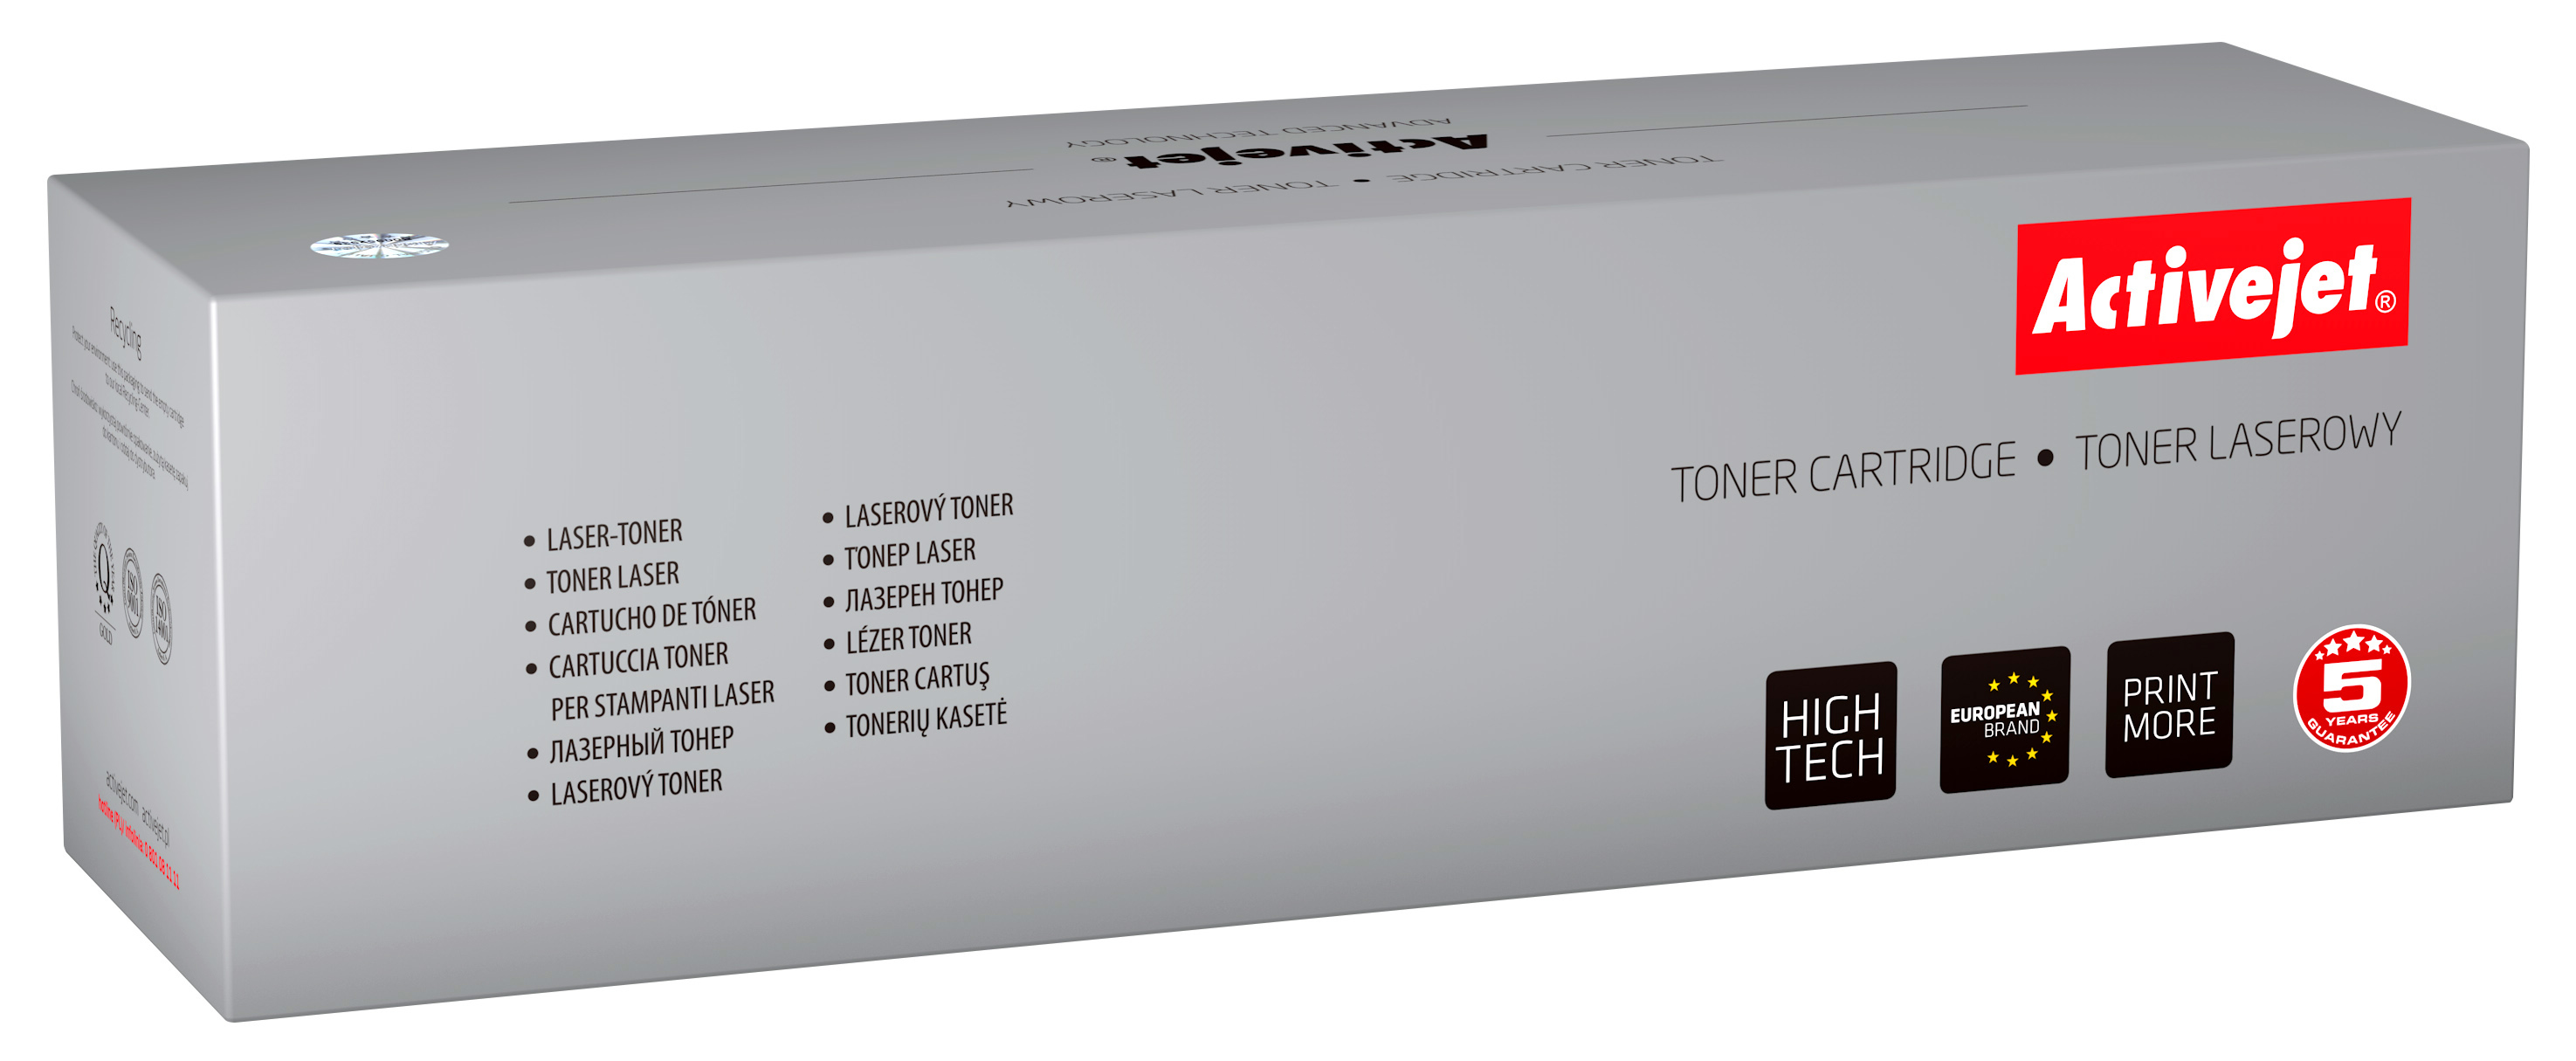 Toner Activejet ATS-K406AN do drukarki Samsung, Zamiennik Samsung CLT-K406S;  Premium;  1500 stron;  czarny.